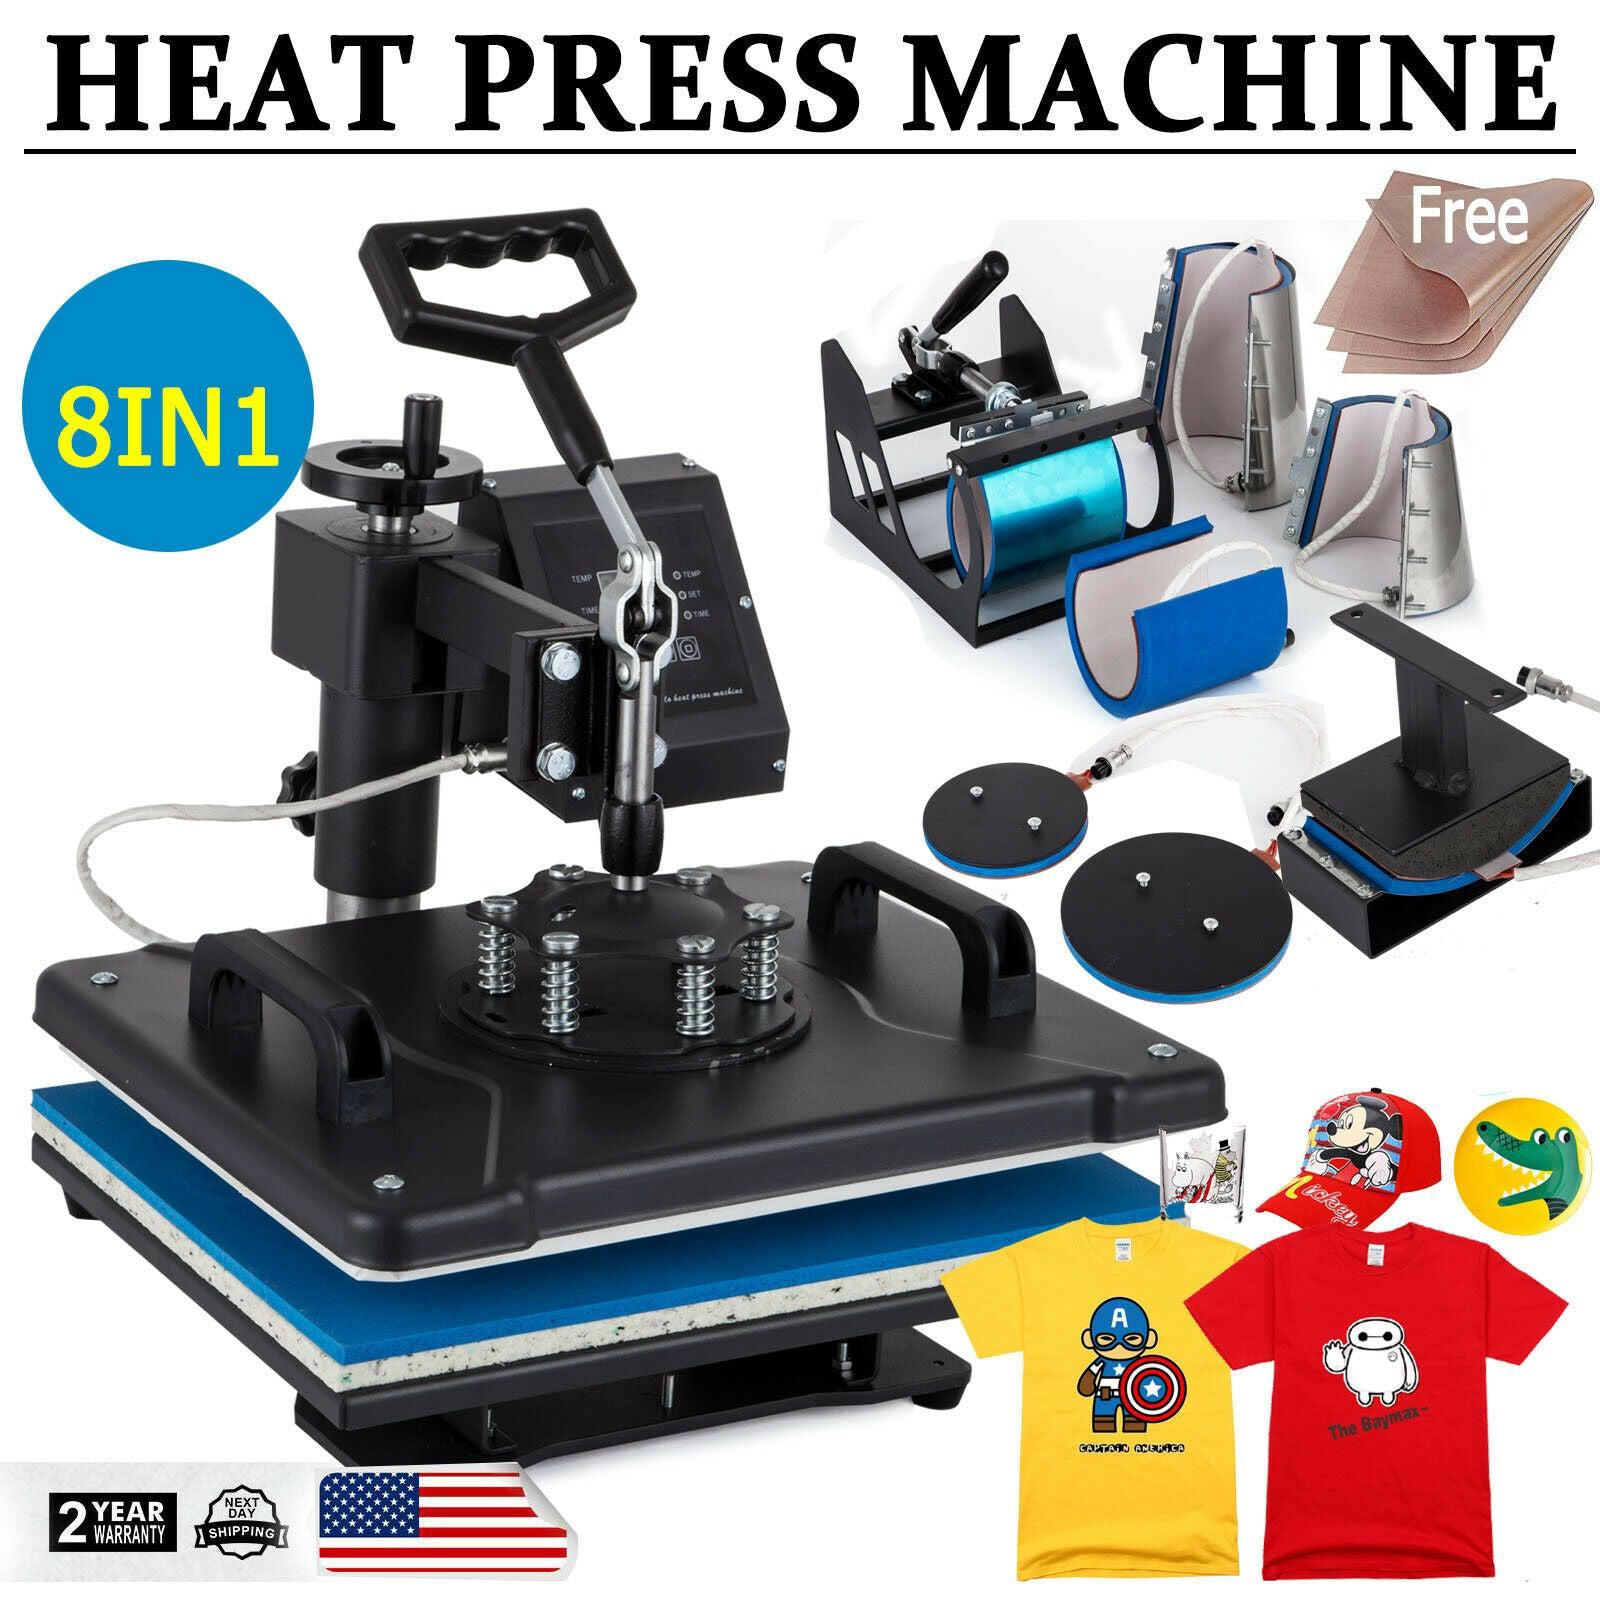 Mophorn Heat Press Machine 15 x 15 inch, 6 in 1 Digital Multifunctional Sublimation Heat Press with Teflon Coated ,360 Degree Rotation Heat Press